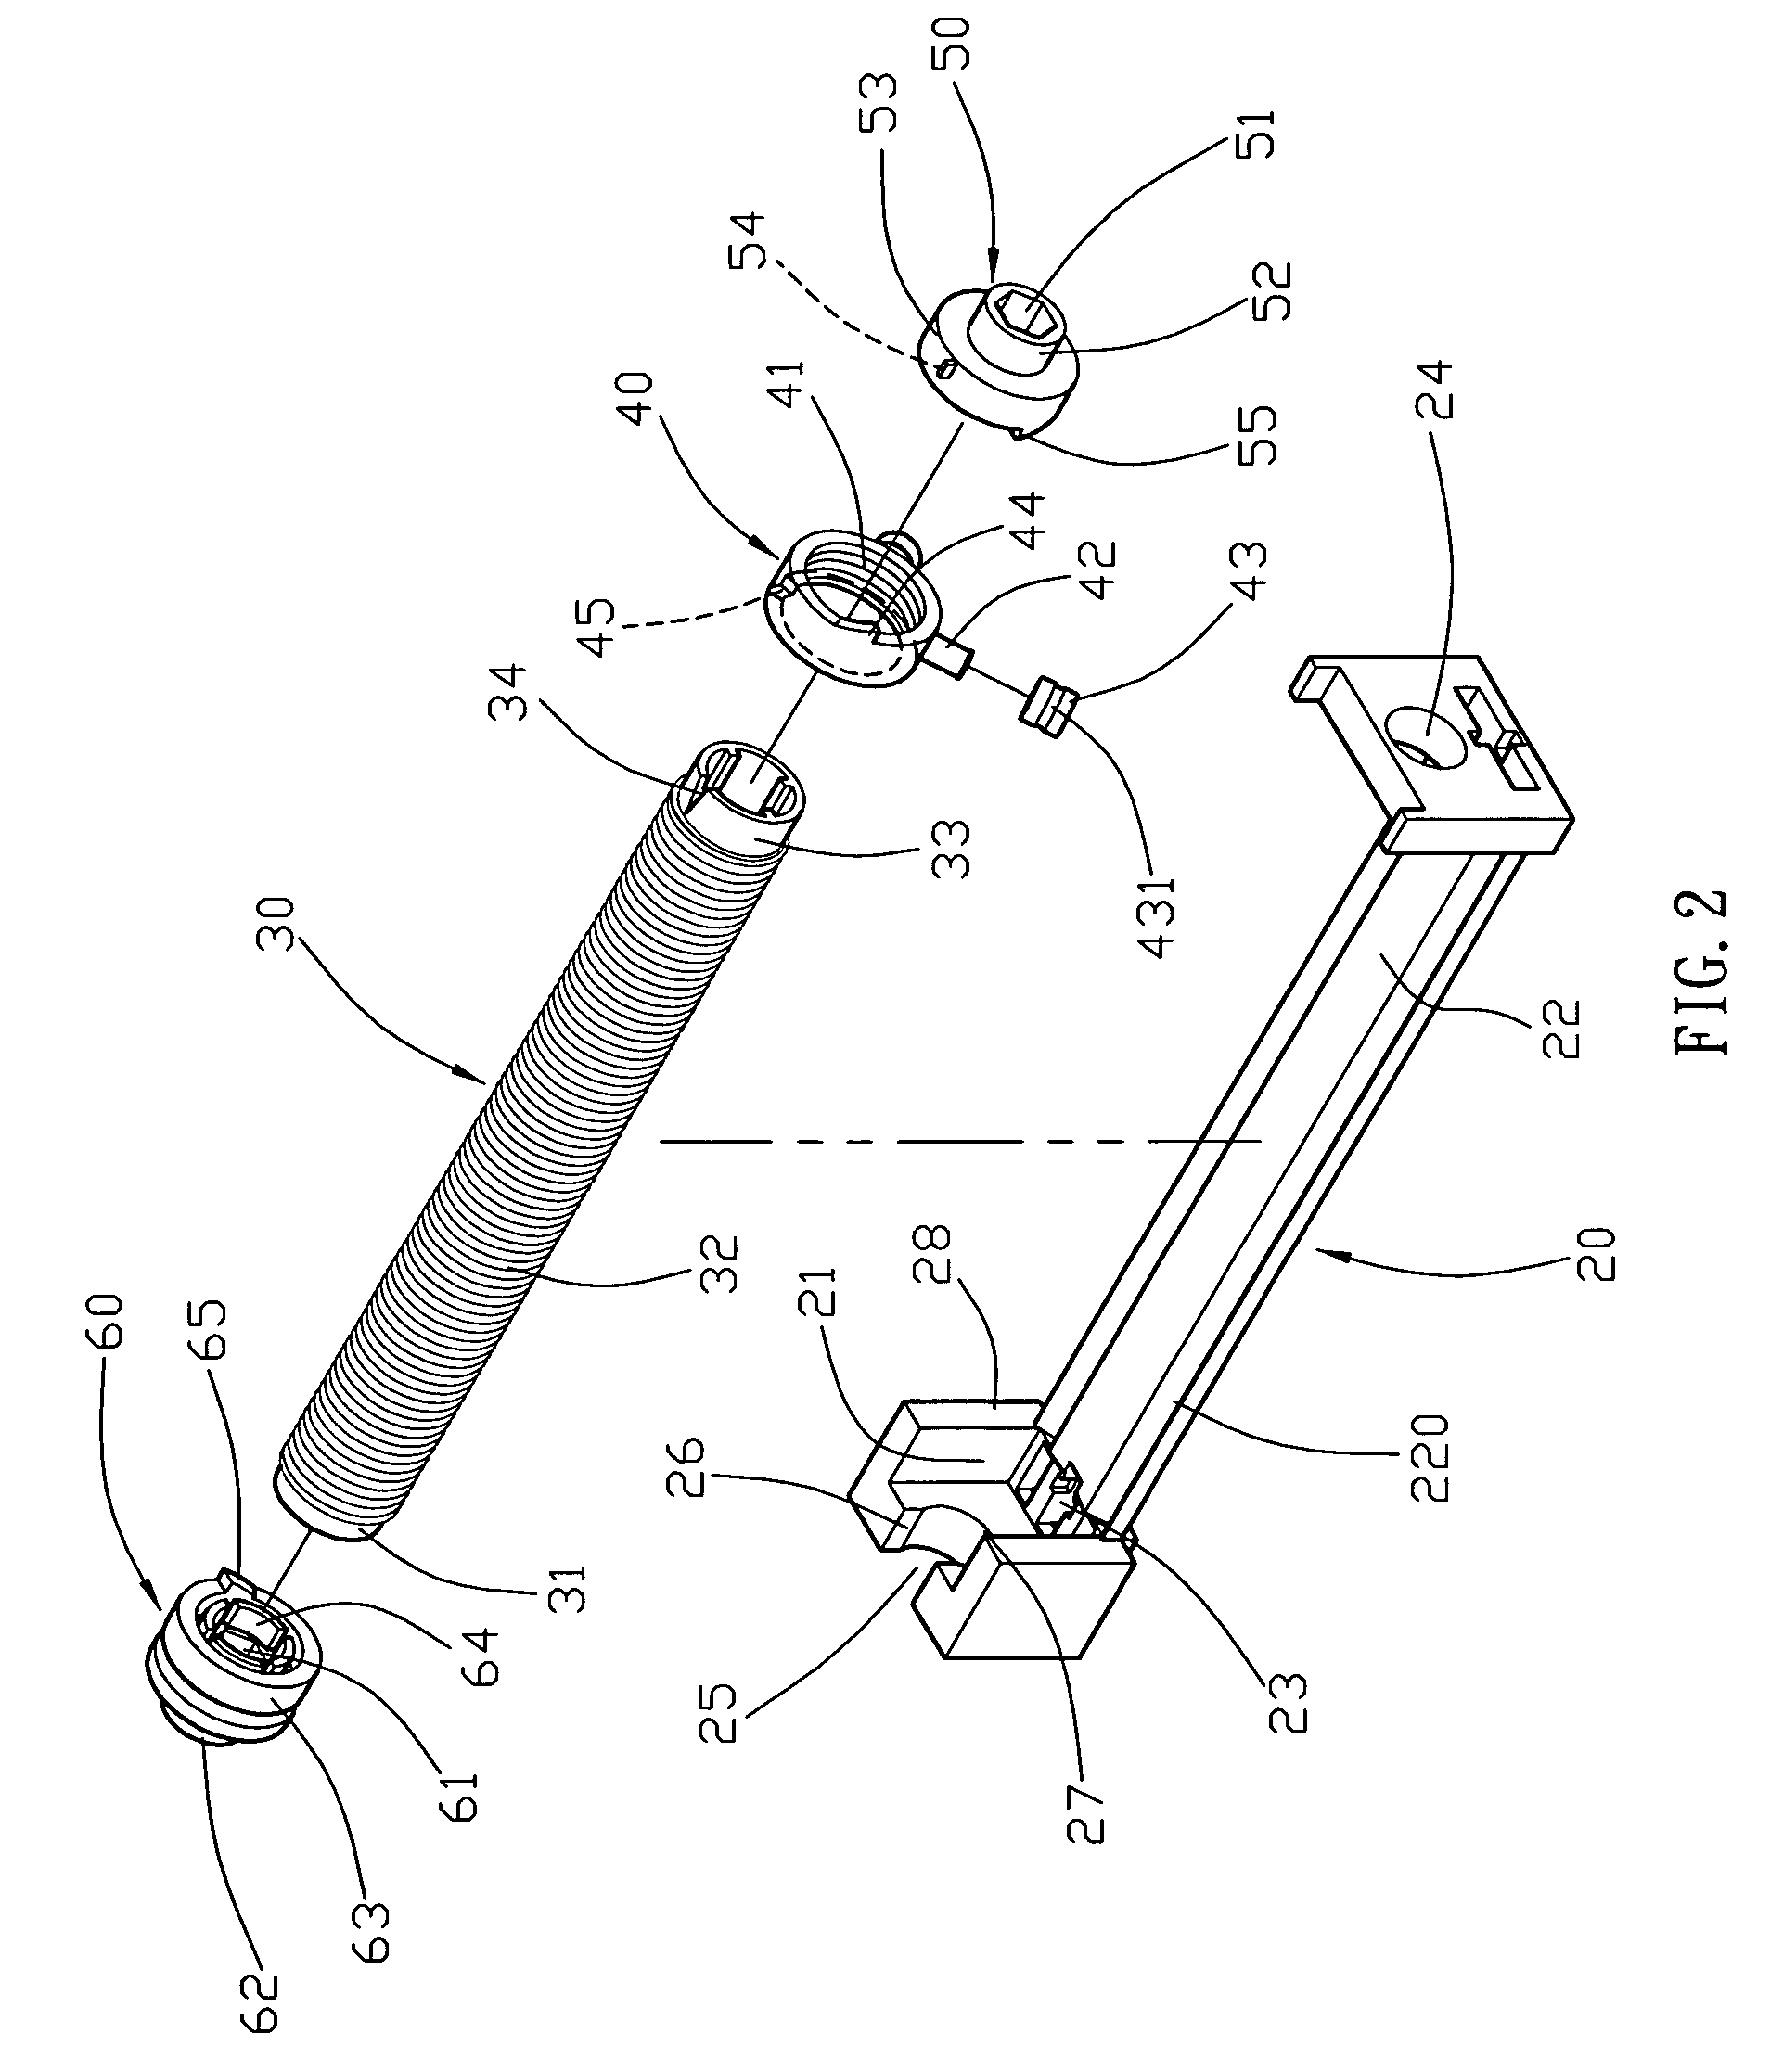 Winding mechanism for a window blind